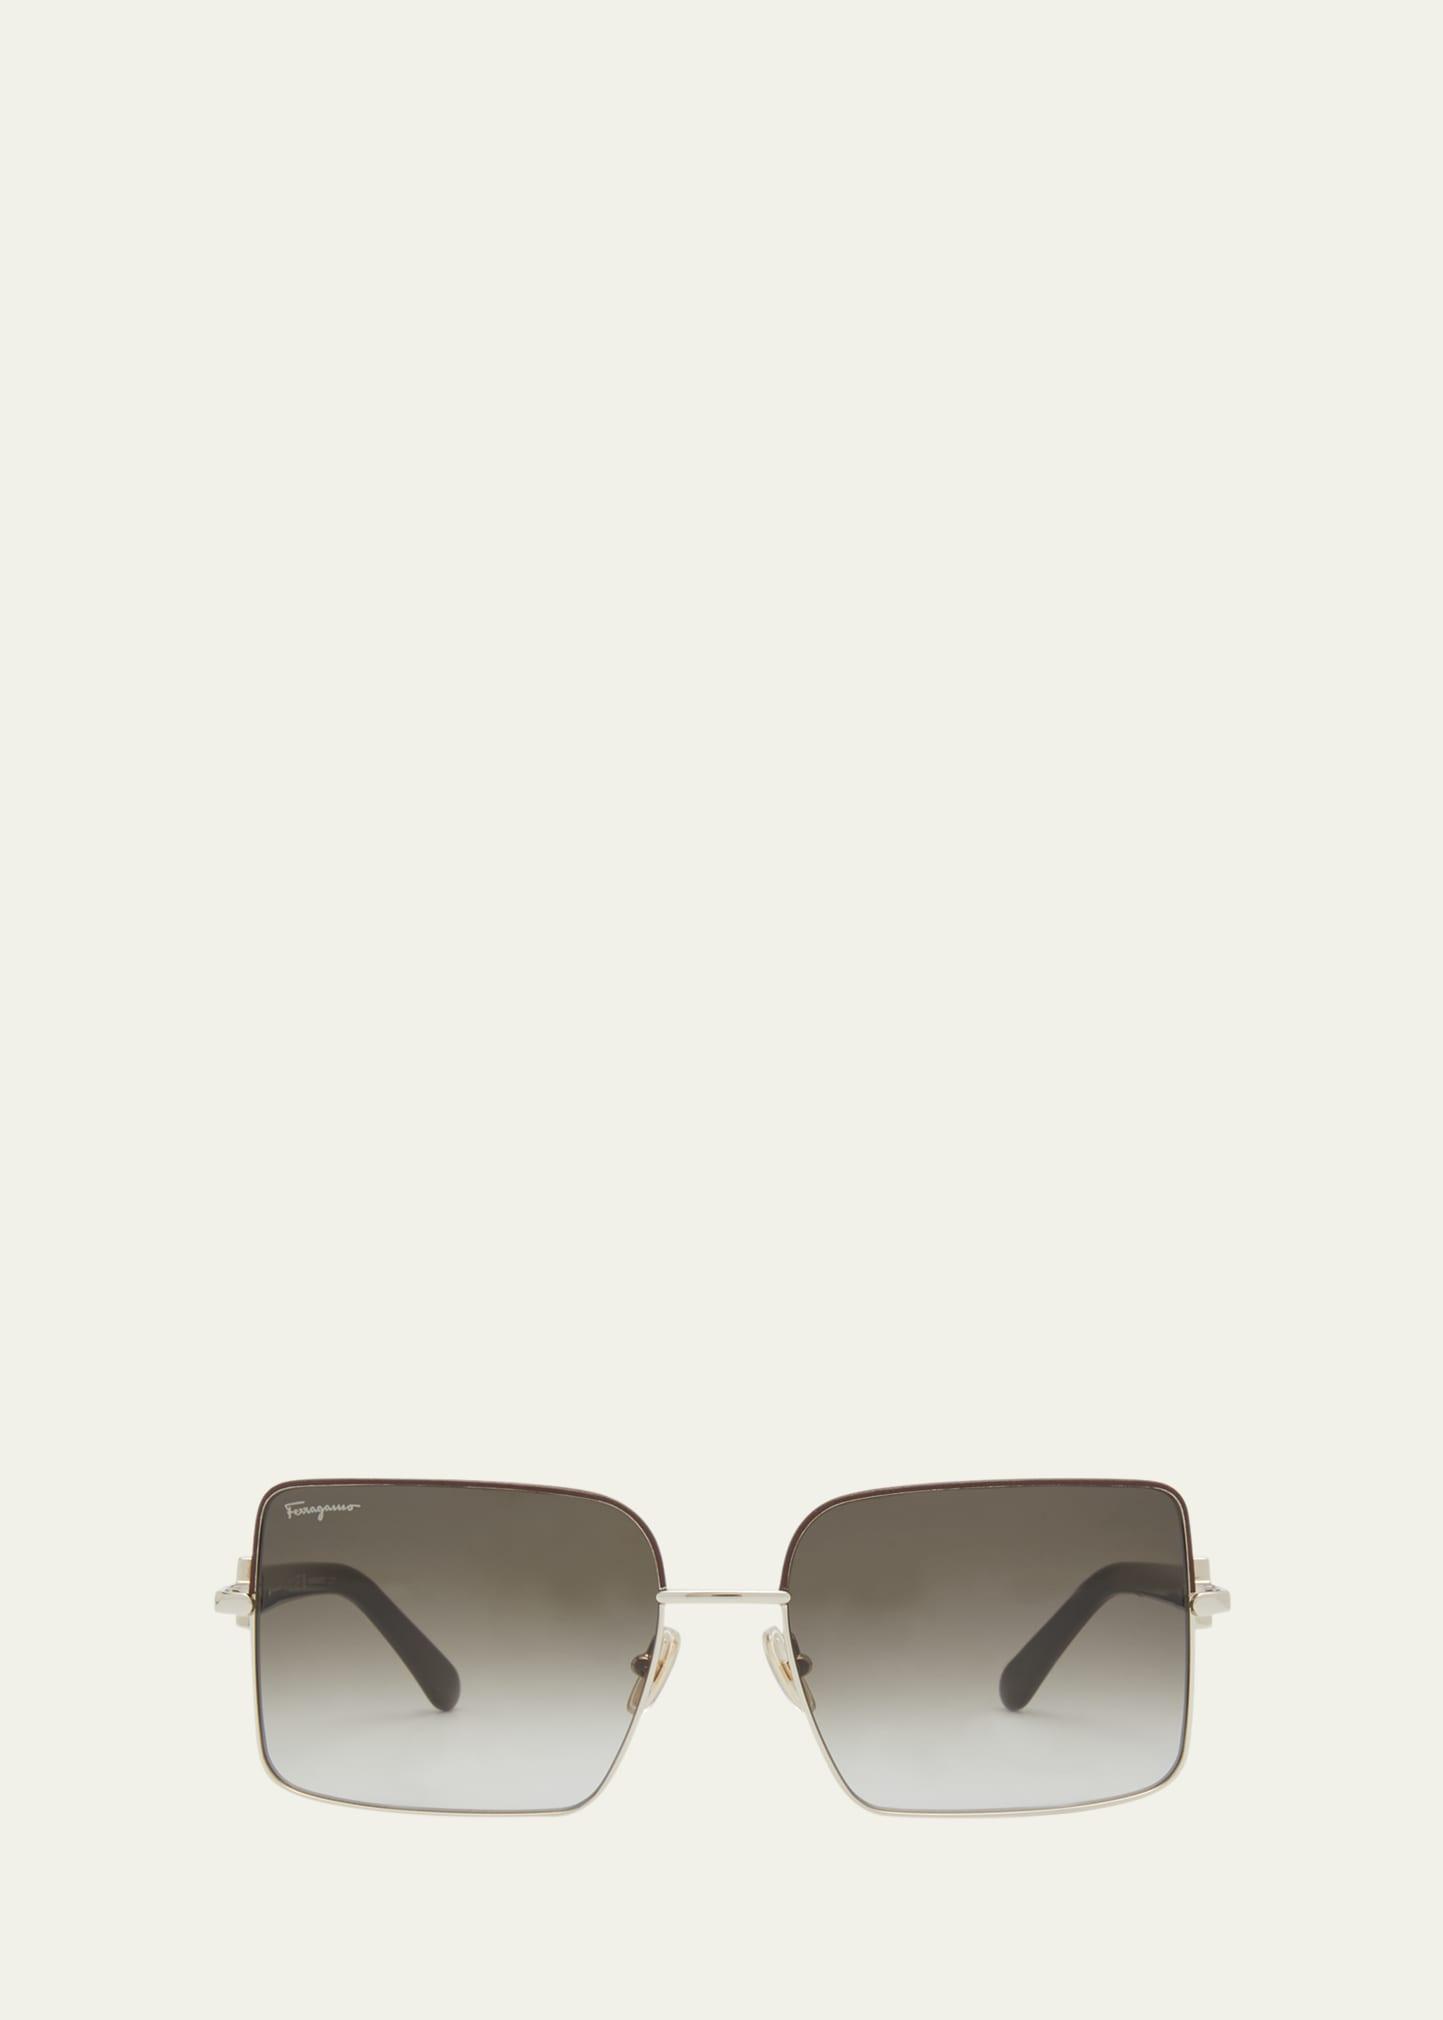 Victoria Beckham 58mm Navigator Sunglasses Product Image